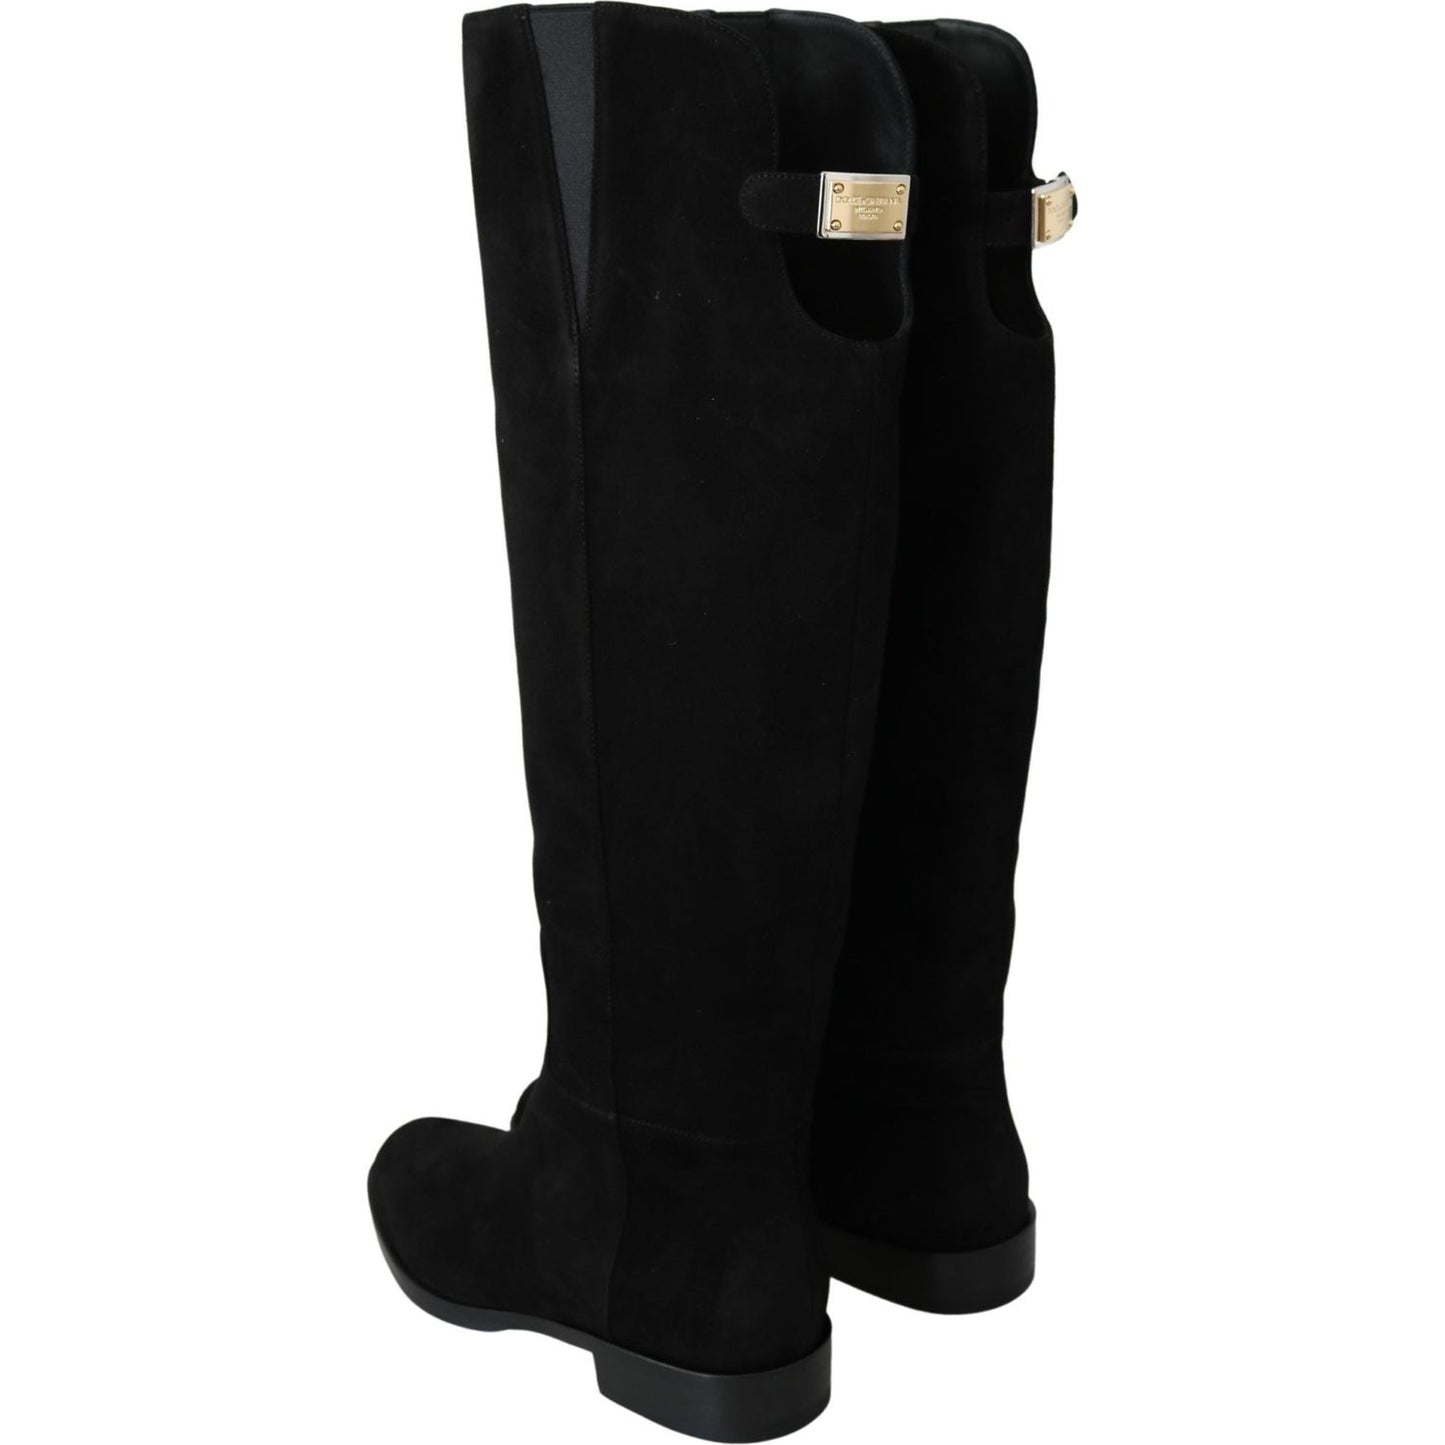 Dolce & Gabbana Elegant Black Suede Knee High Boots black-suede-knee-high-flat-boots-shoes